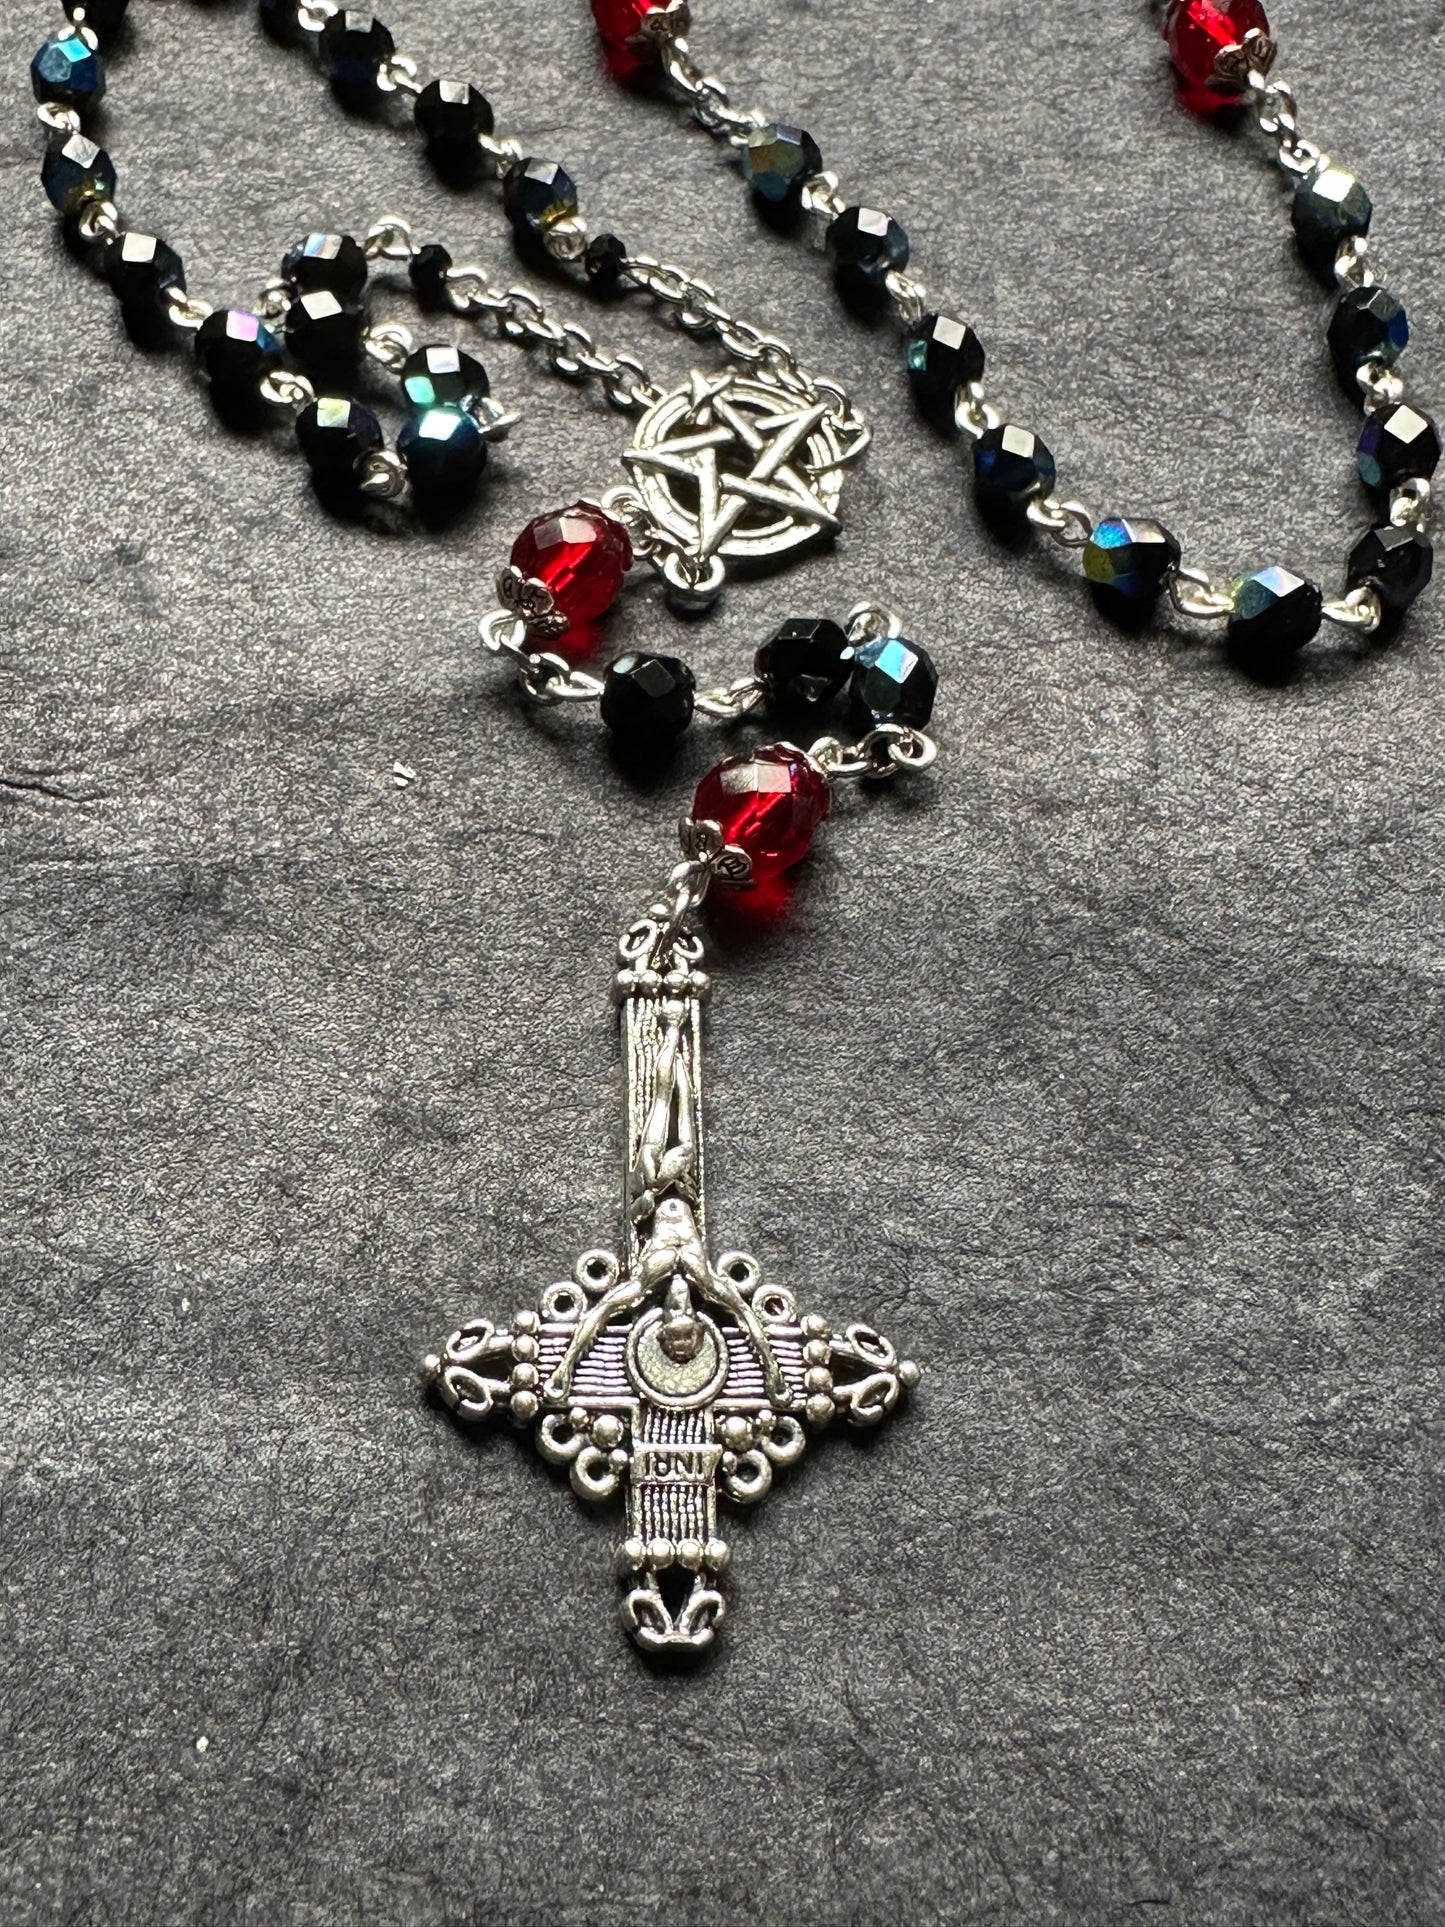 Black iridescent glass bead satanic rosary